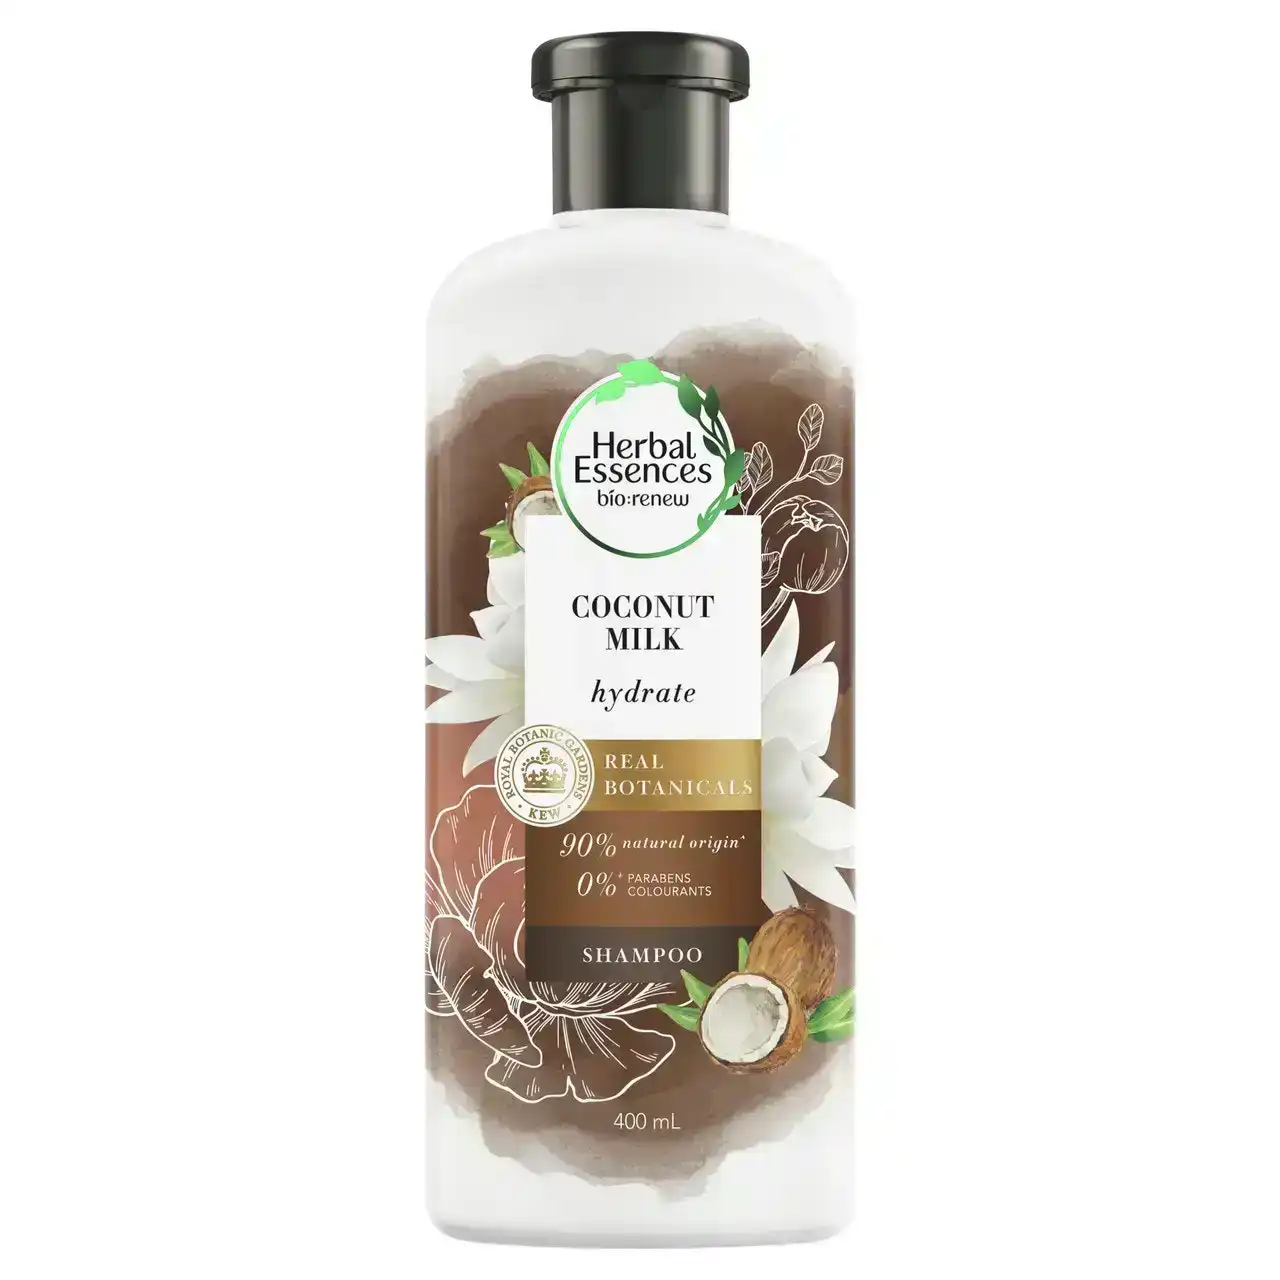 Herbal Essences bio:renew Coconut Milk Hydrating Shampoo for Dry Hair 400mL